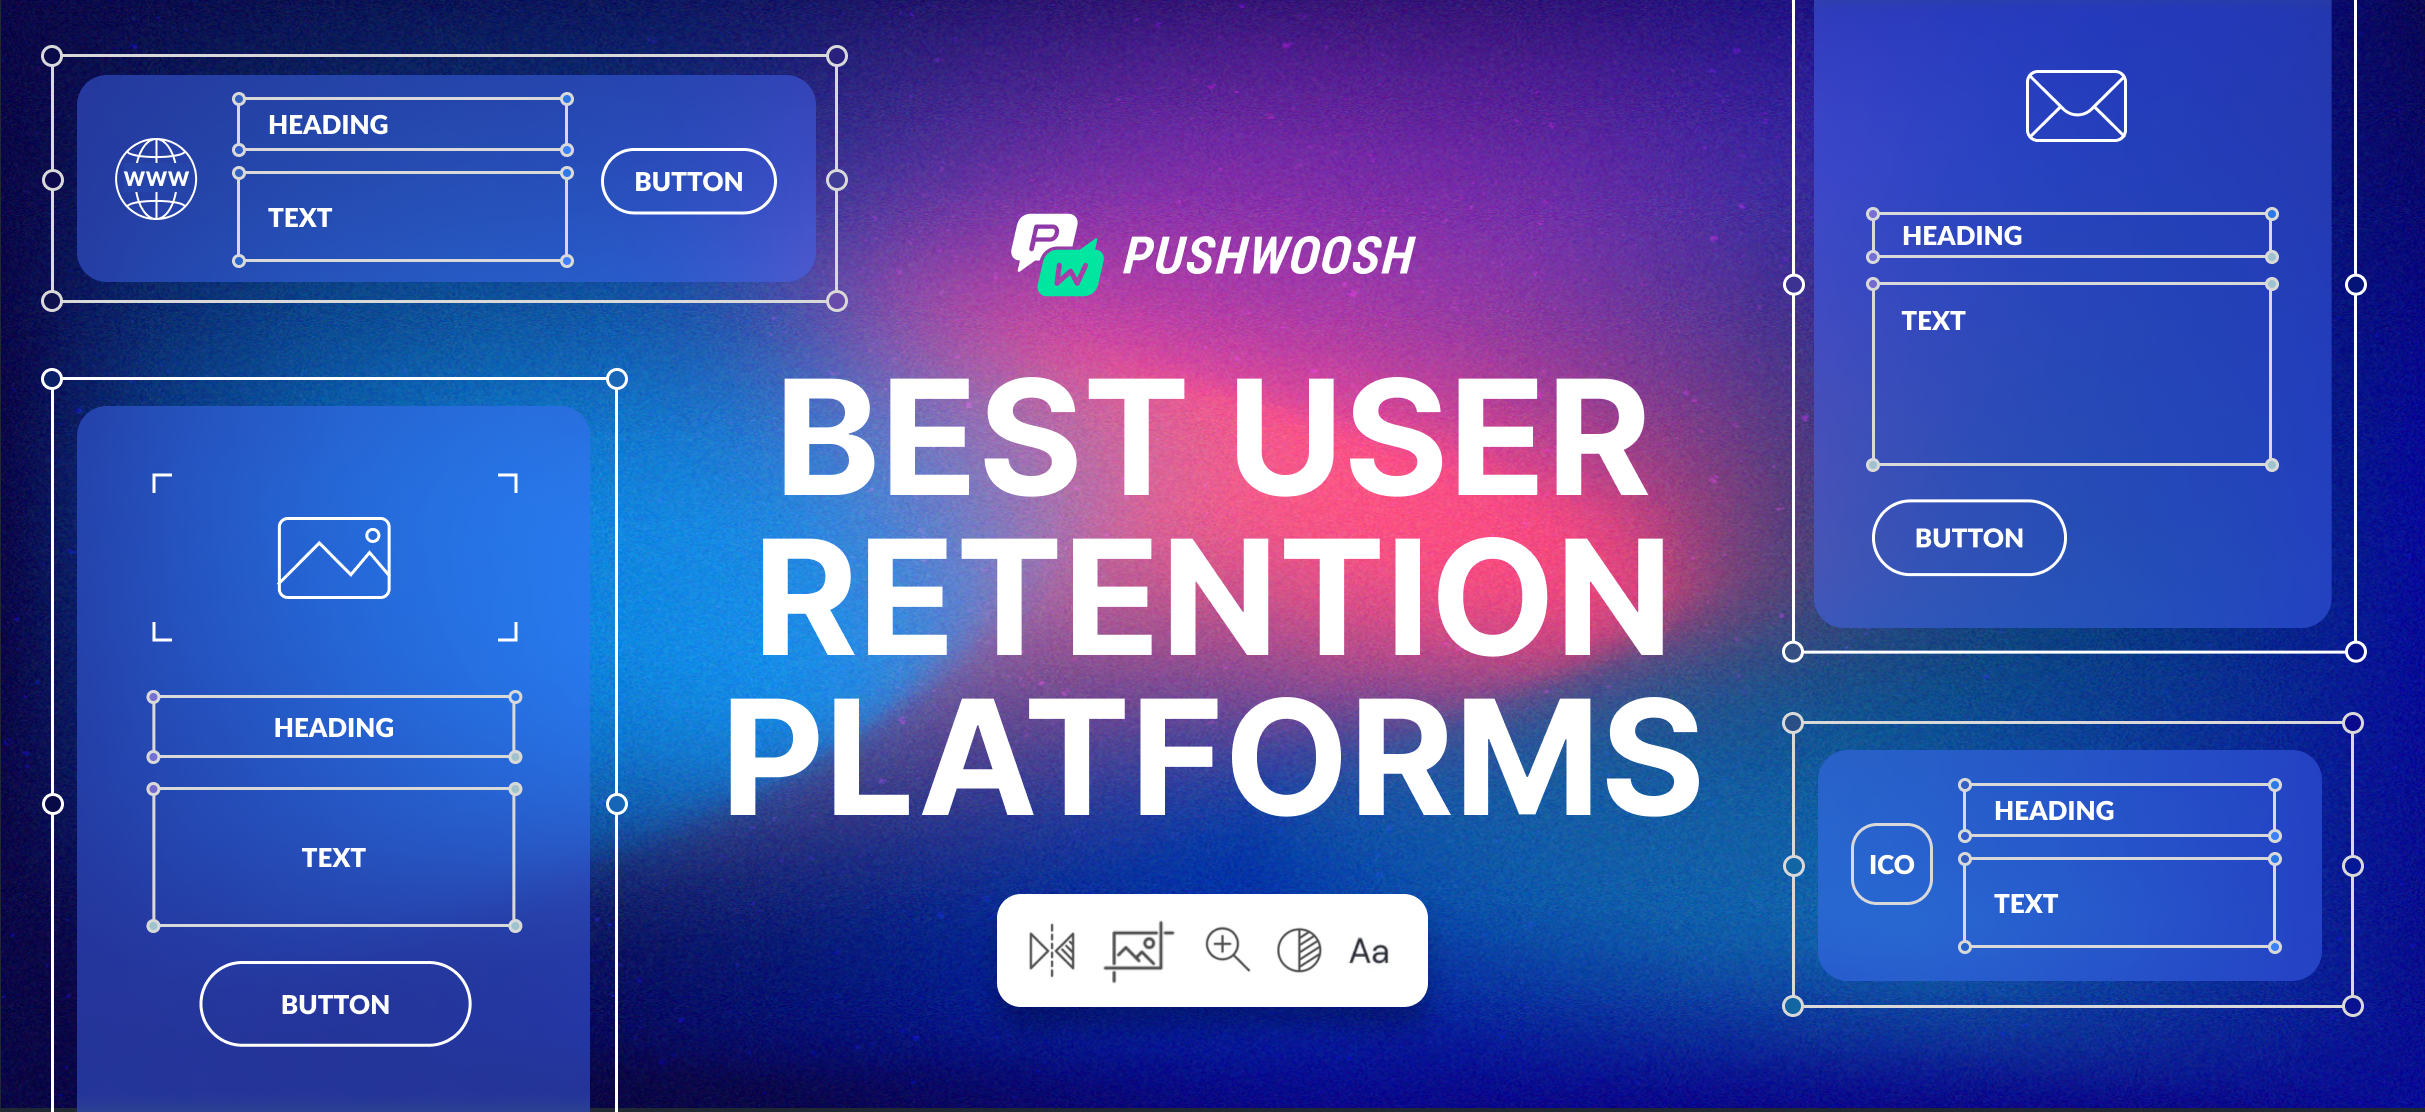 7 Best User Retention Platforms for Mobile Apps